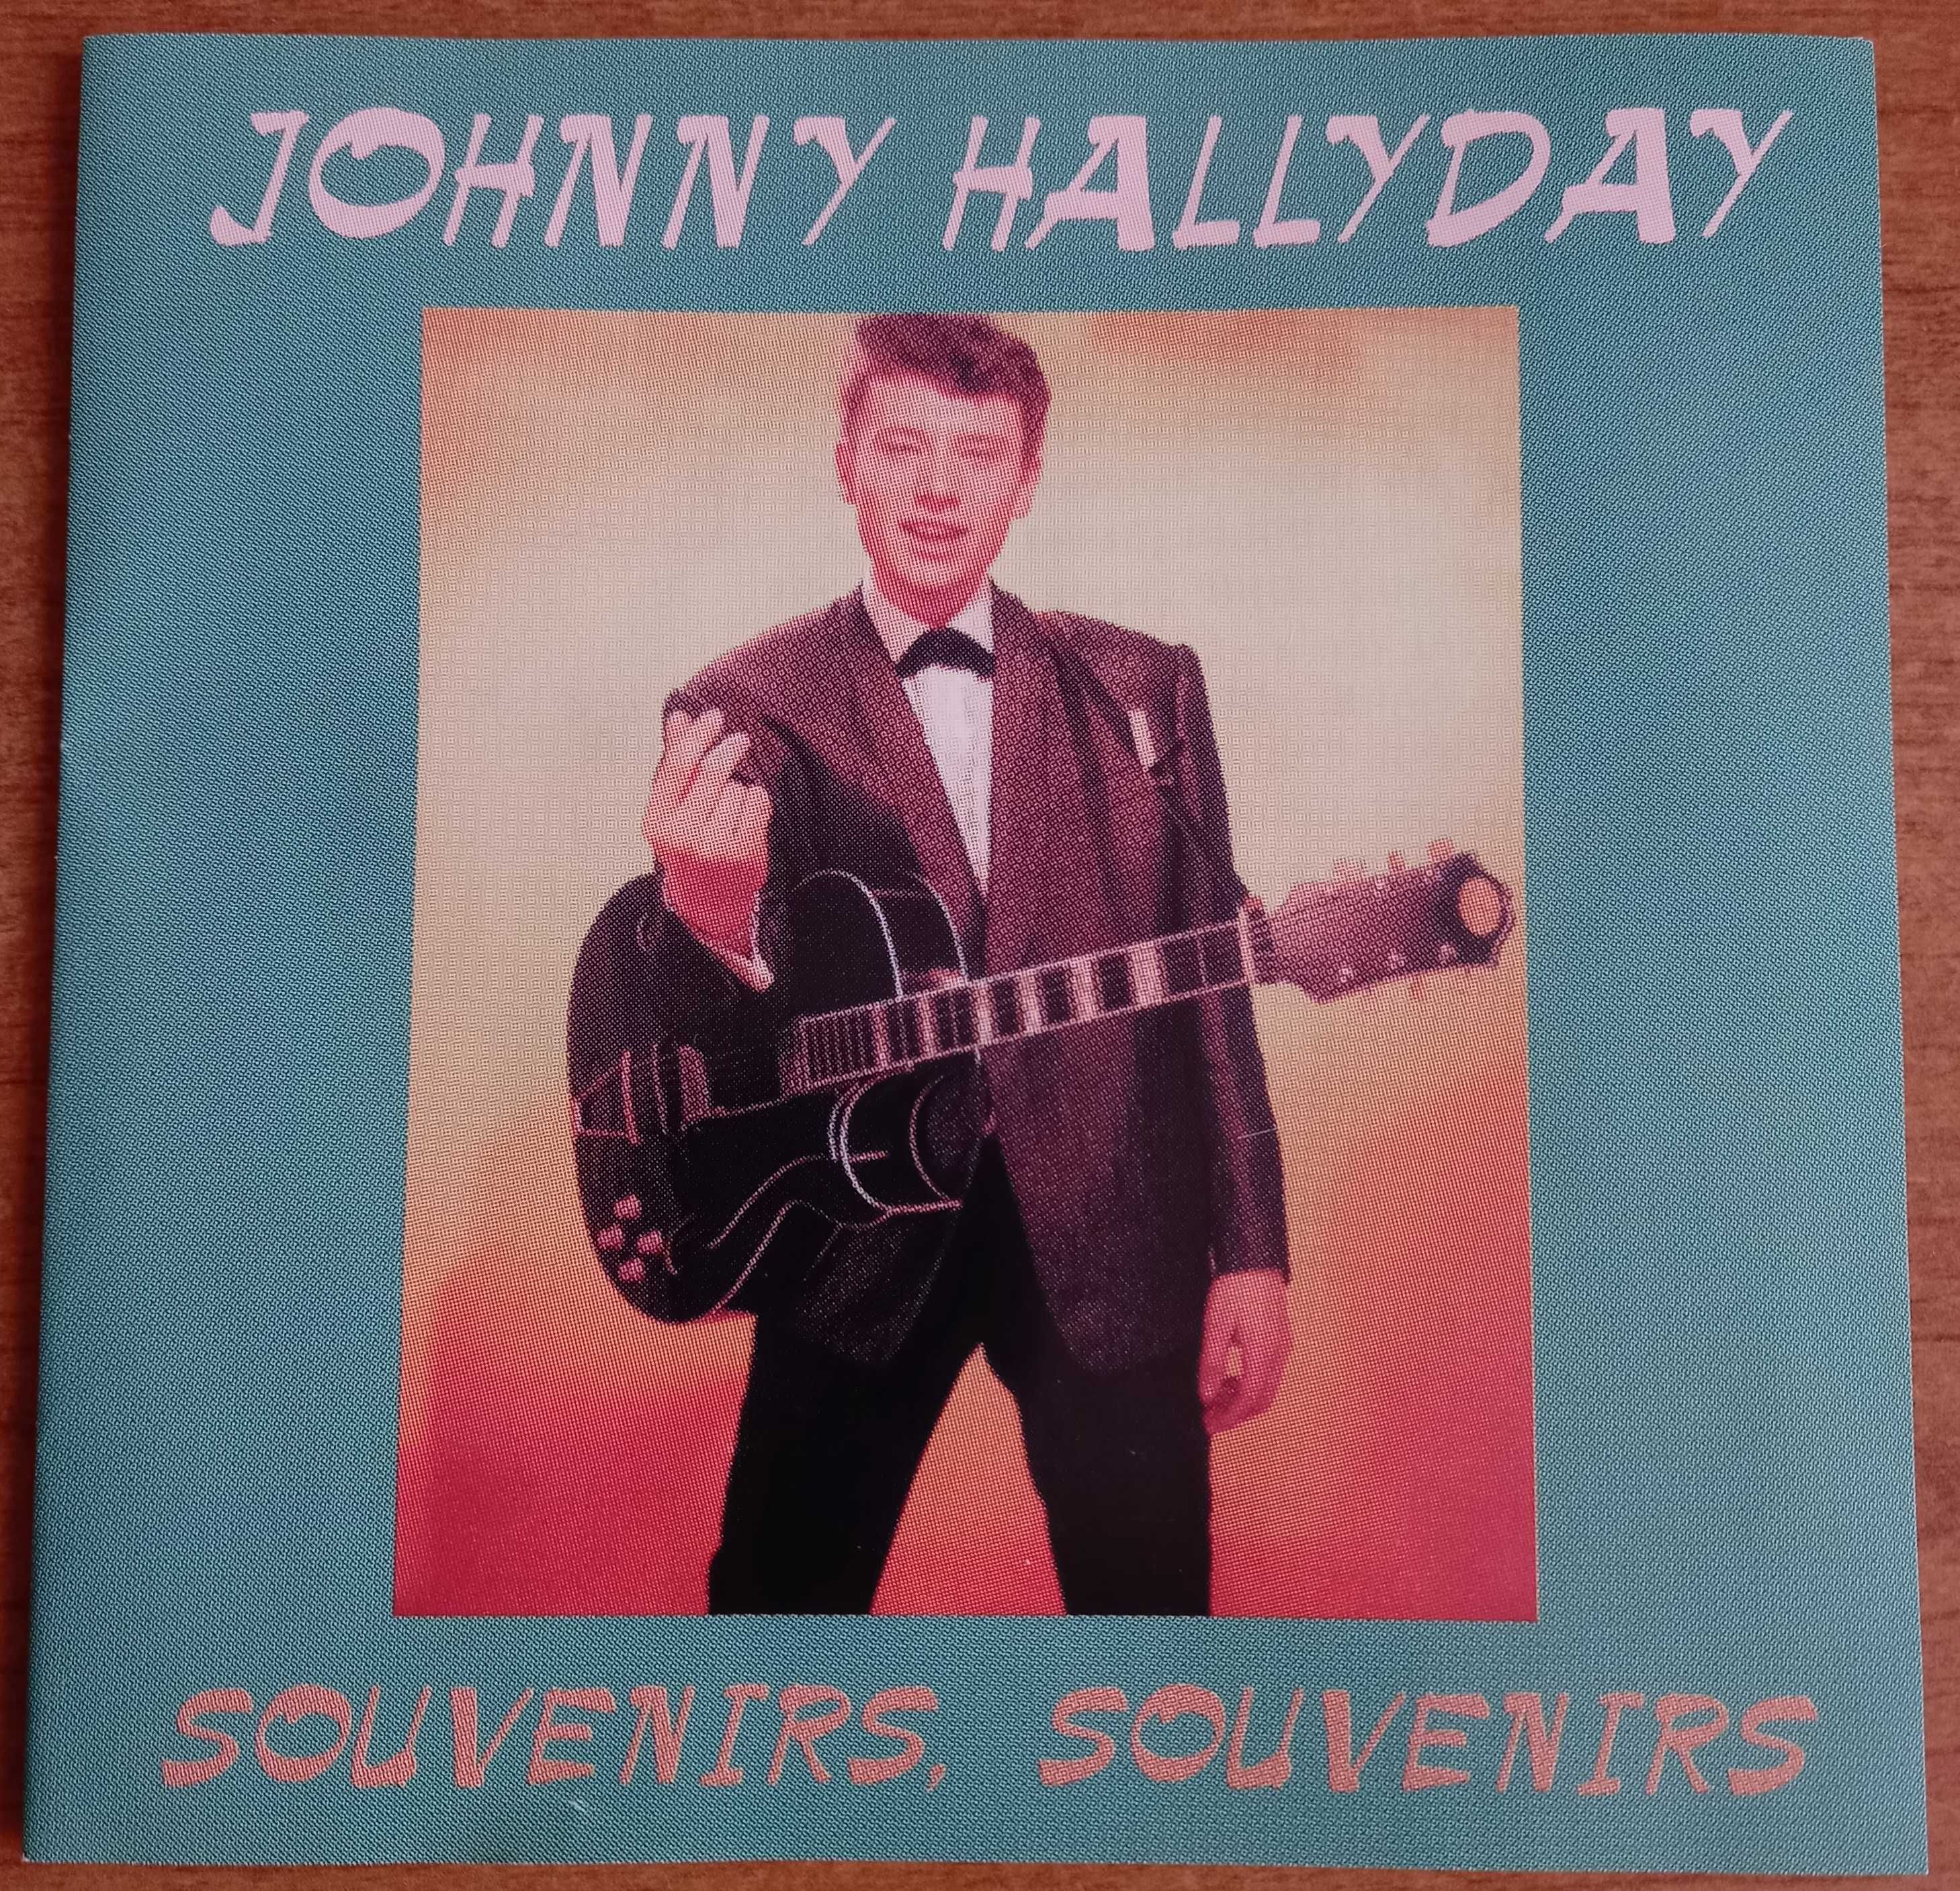 CD Johnny Hallyday "Souvenirs Souvenirs", 1998 год